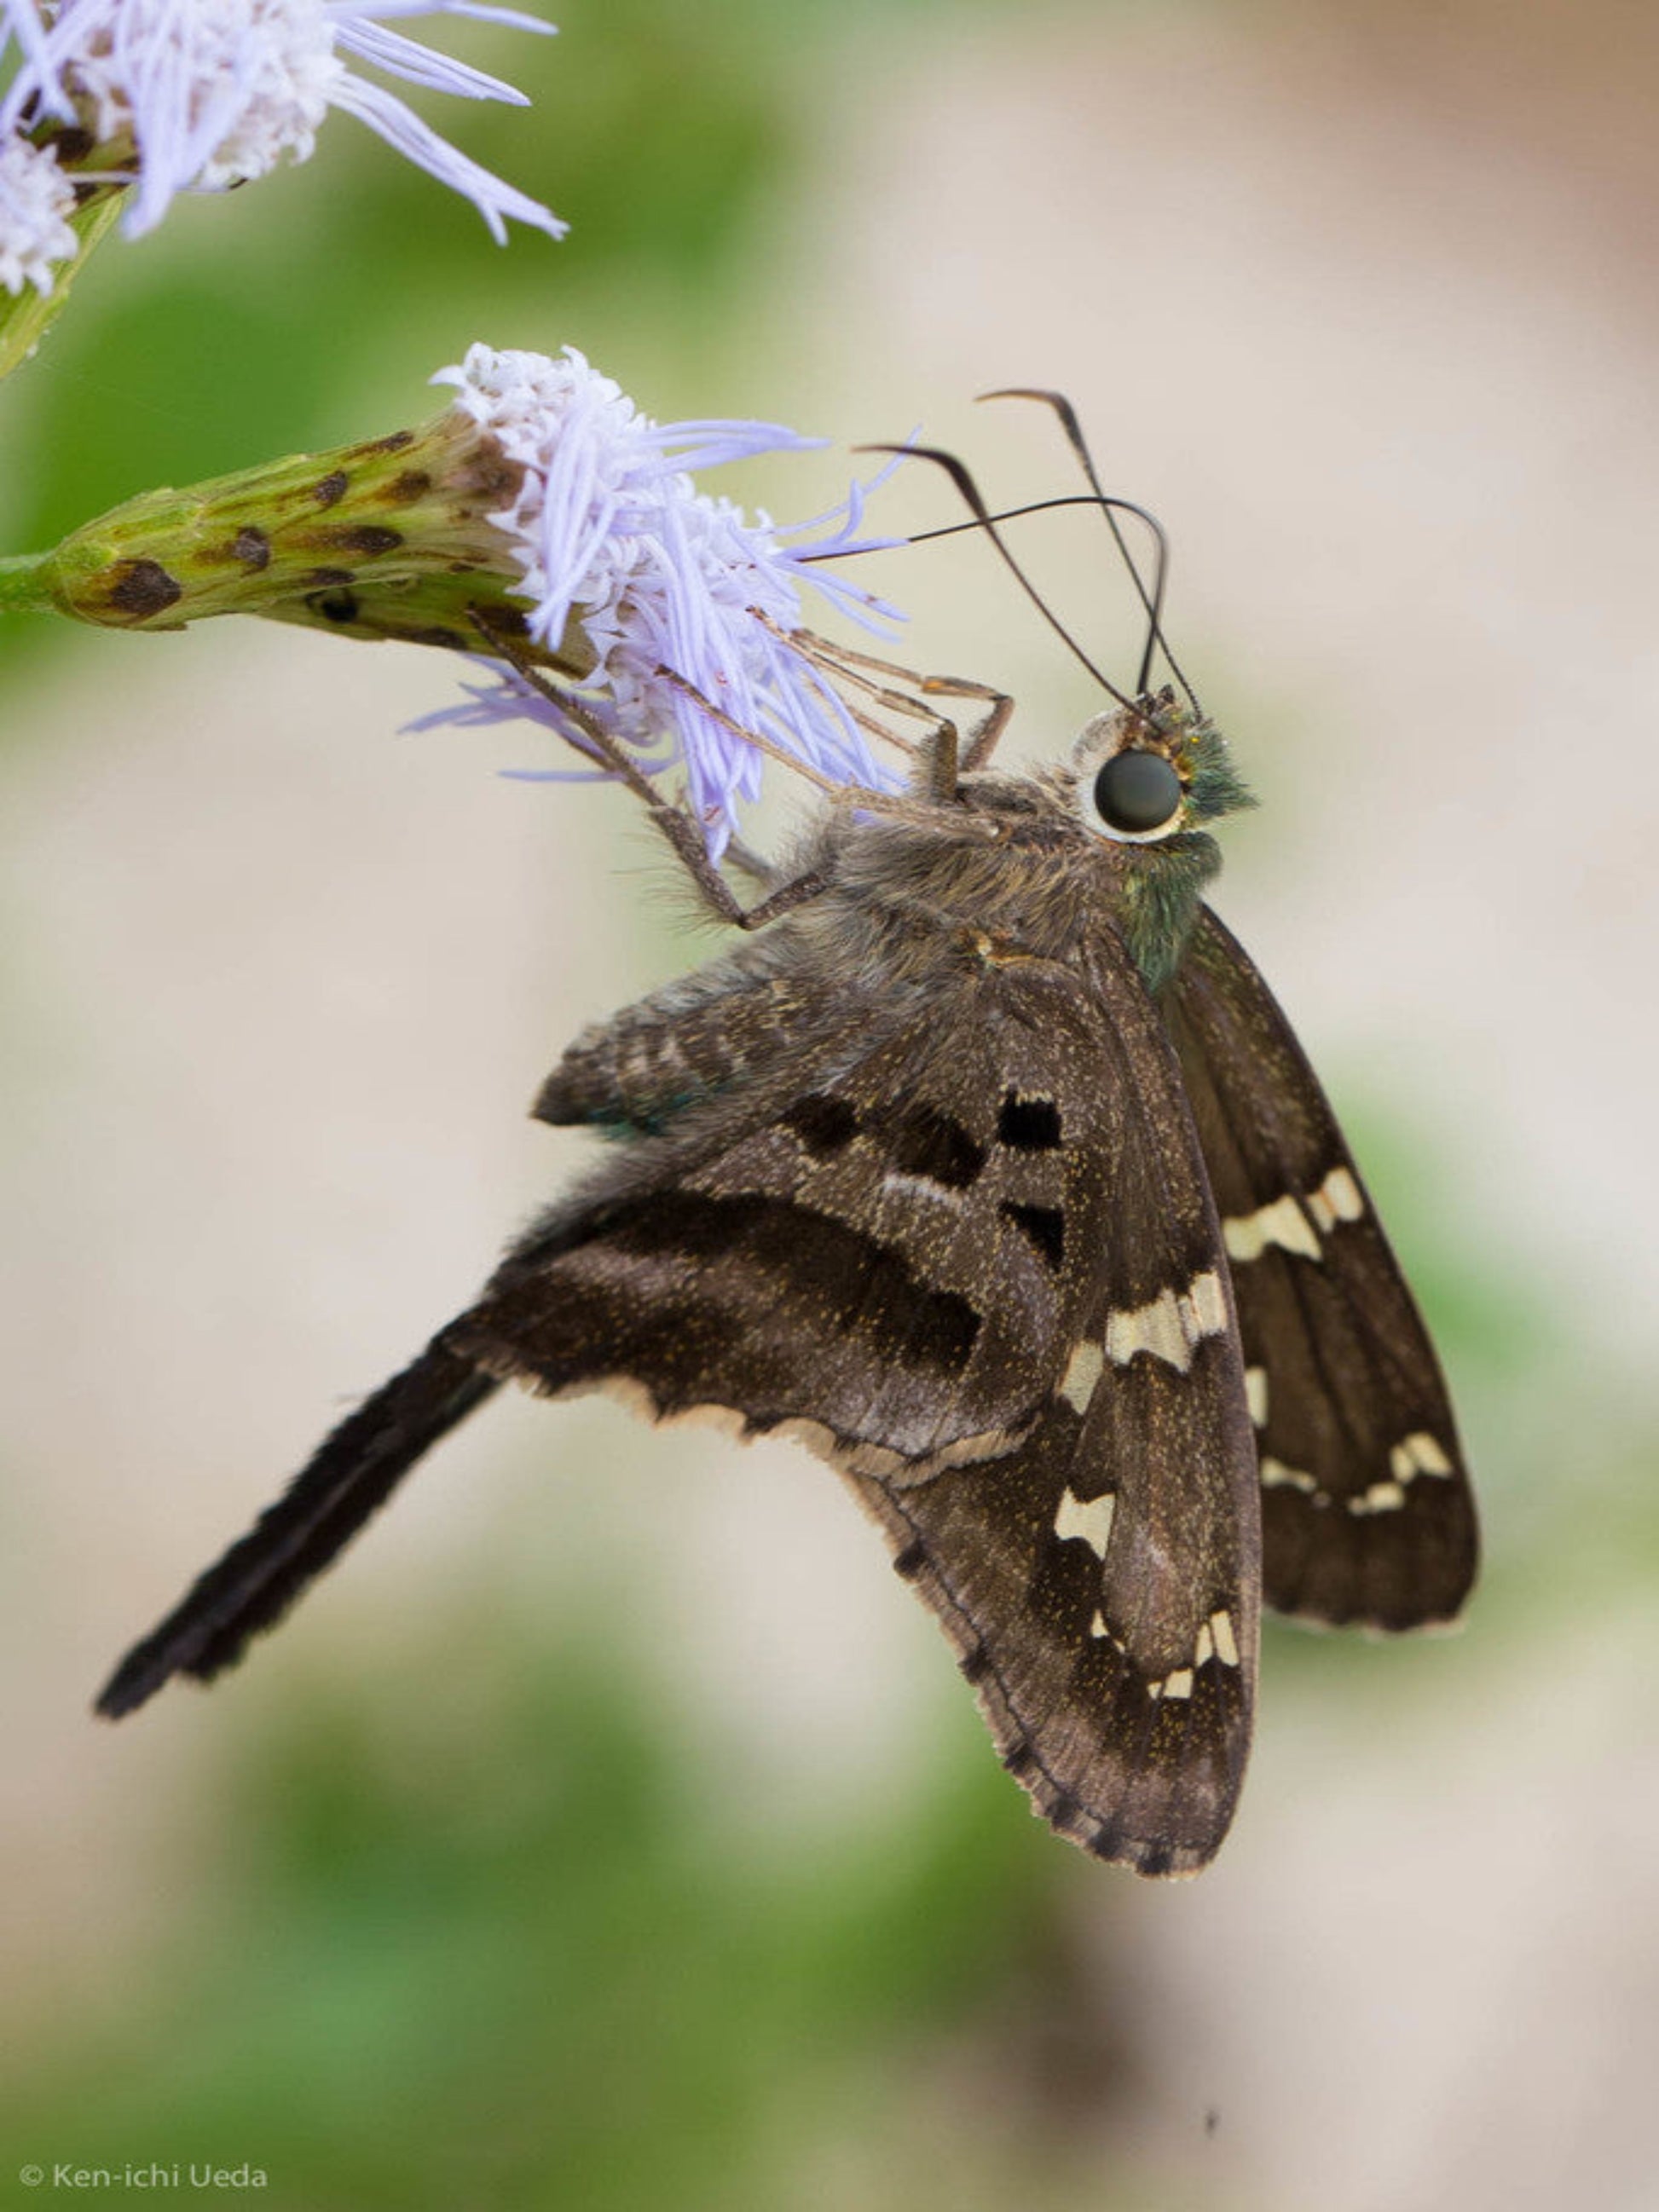 Longtail skipper butterfly on his host plant flower